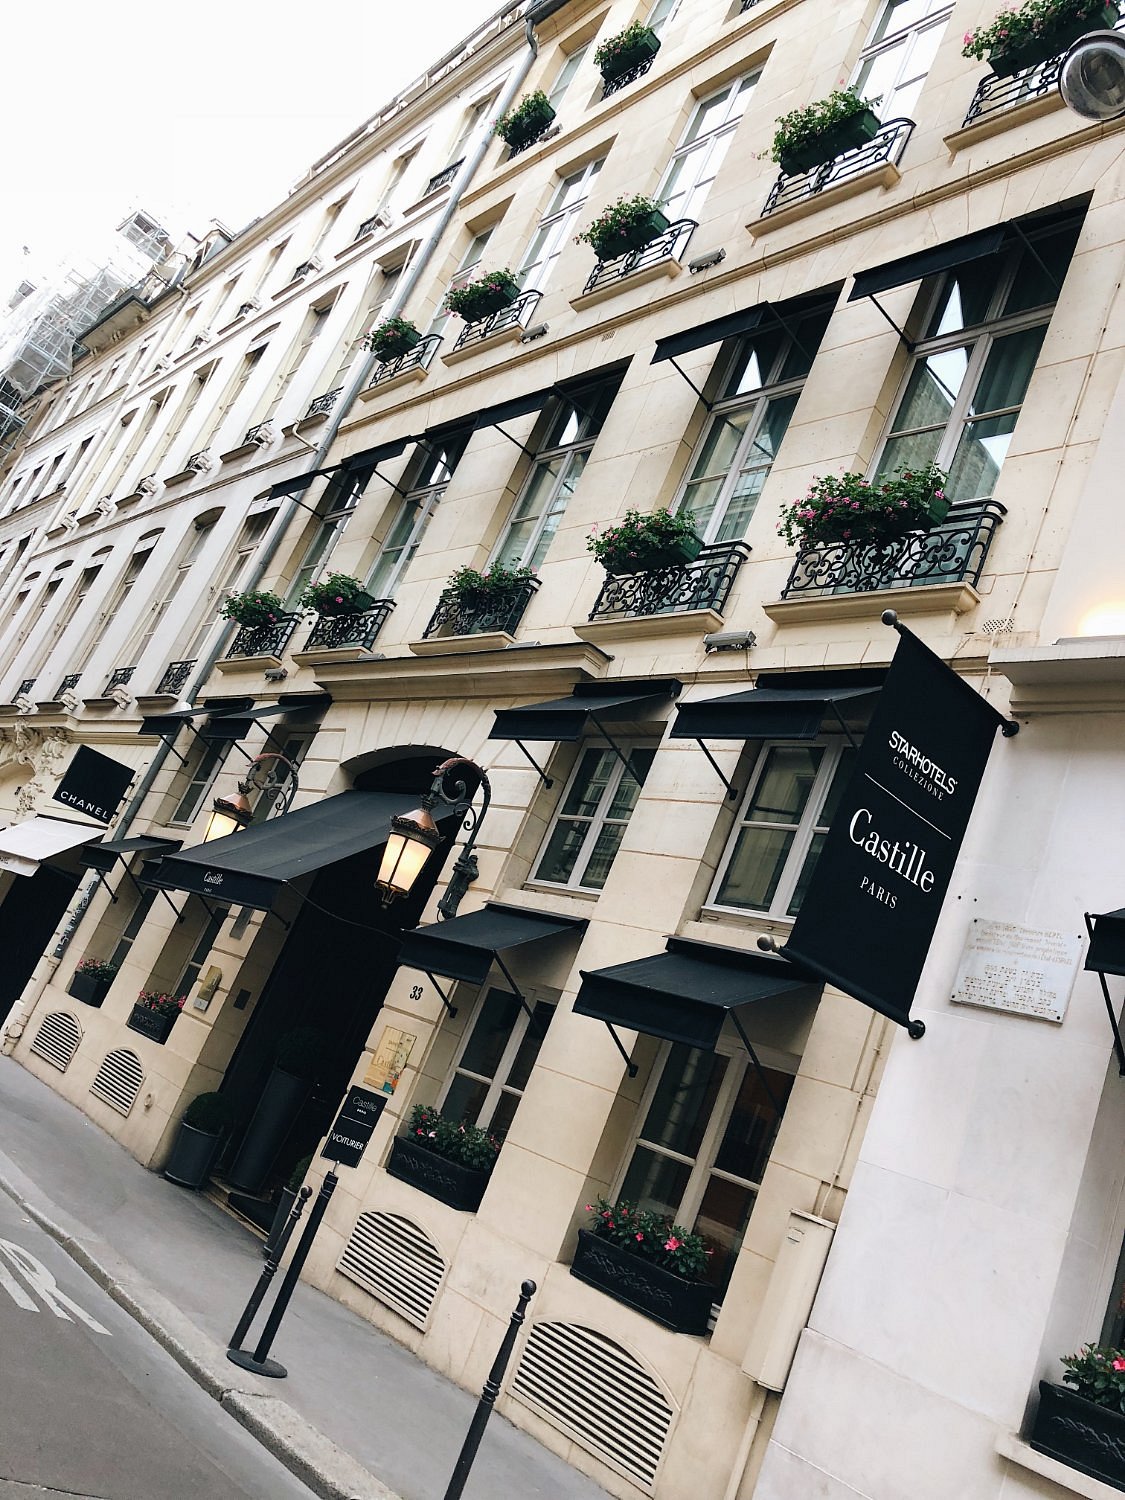 CASTILLE PARIS - Updated 2022 Prices & Hotel Reviews (France)